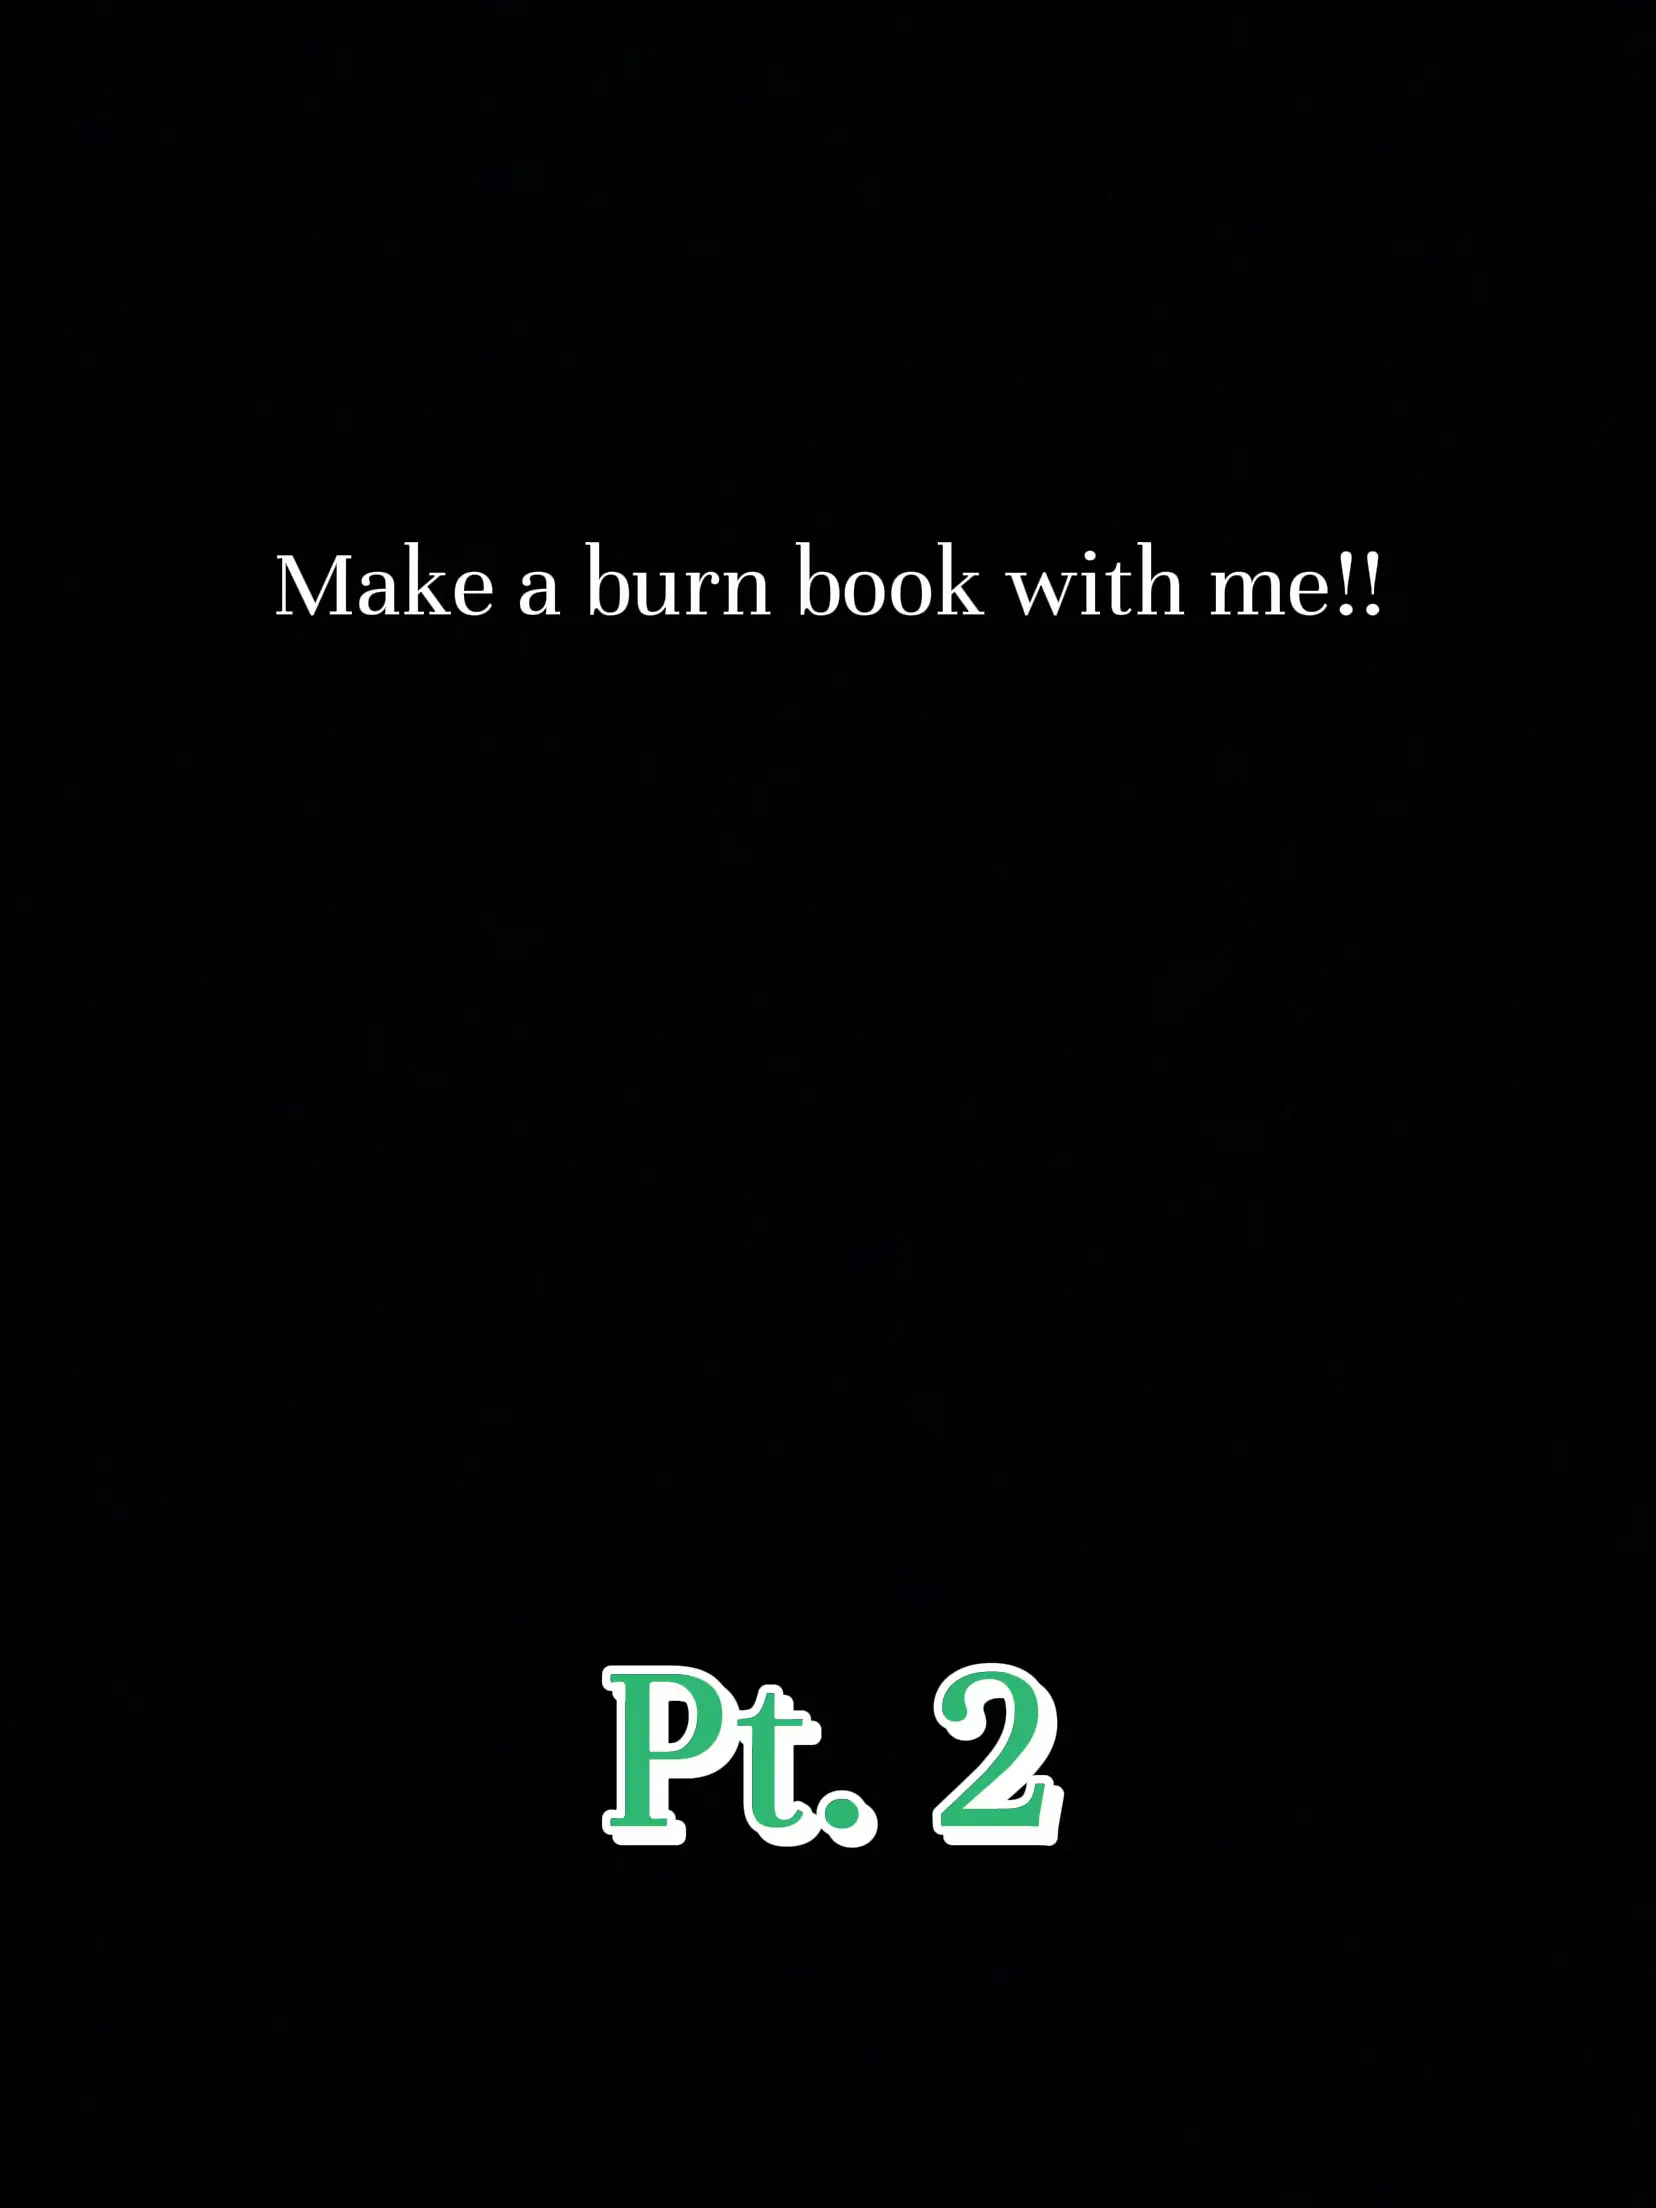 how to make a burn book - Lemon8 Search